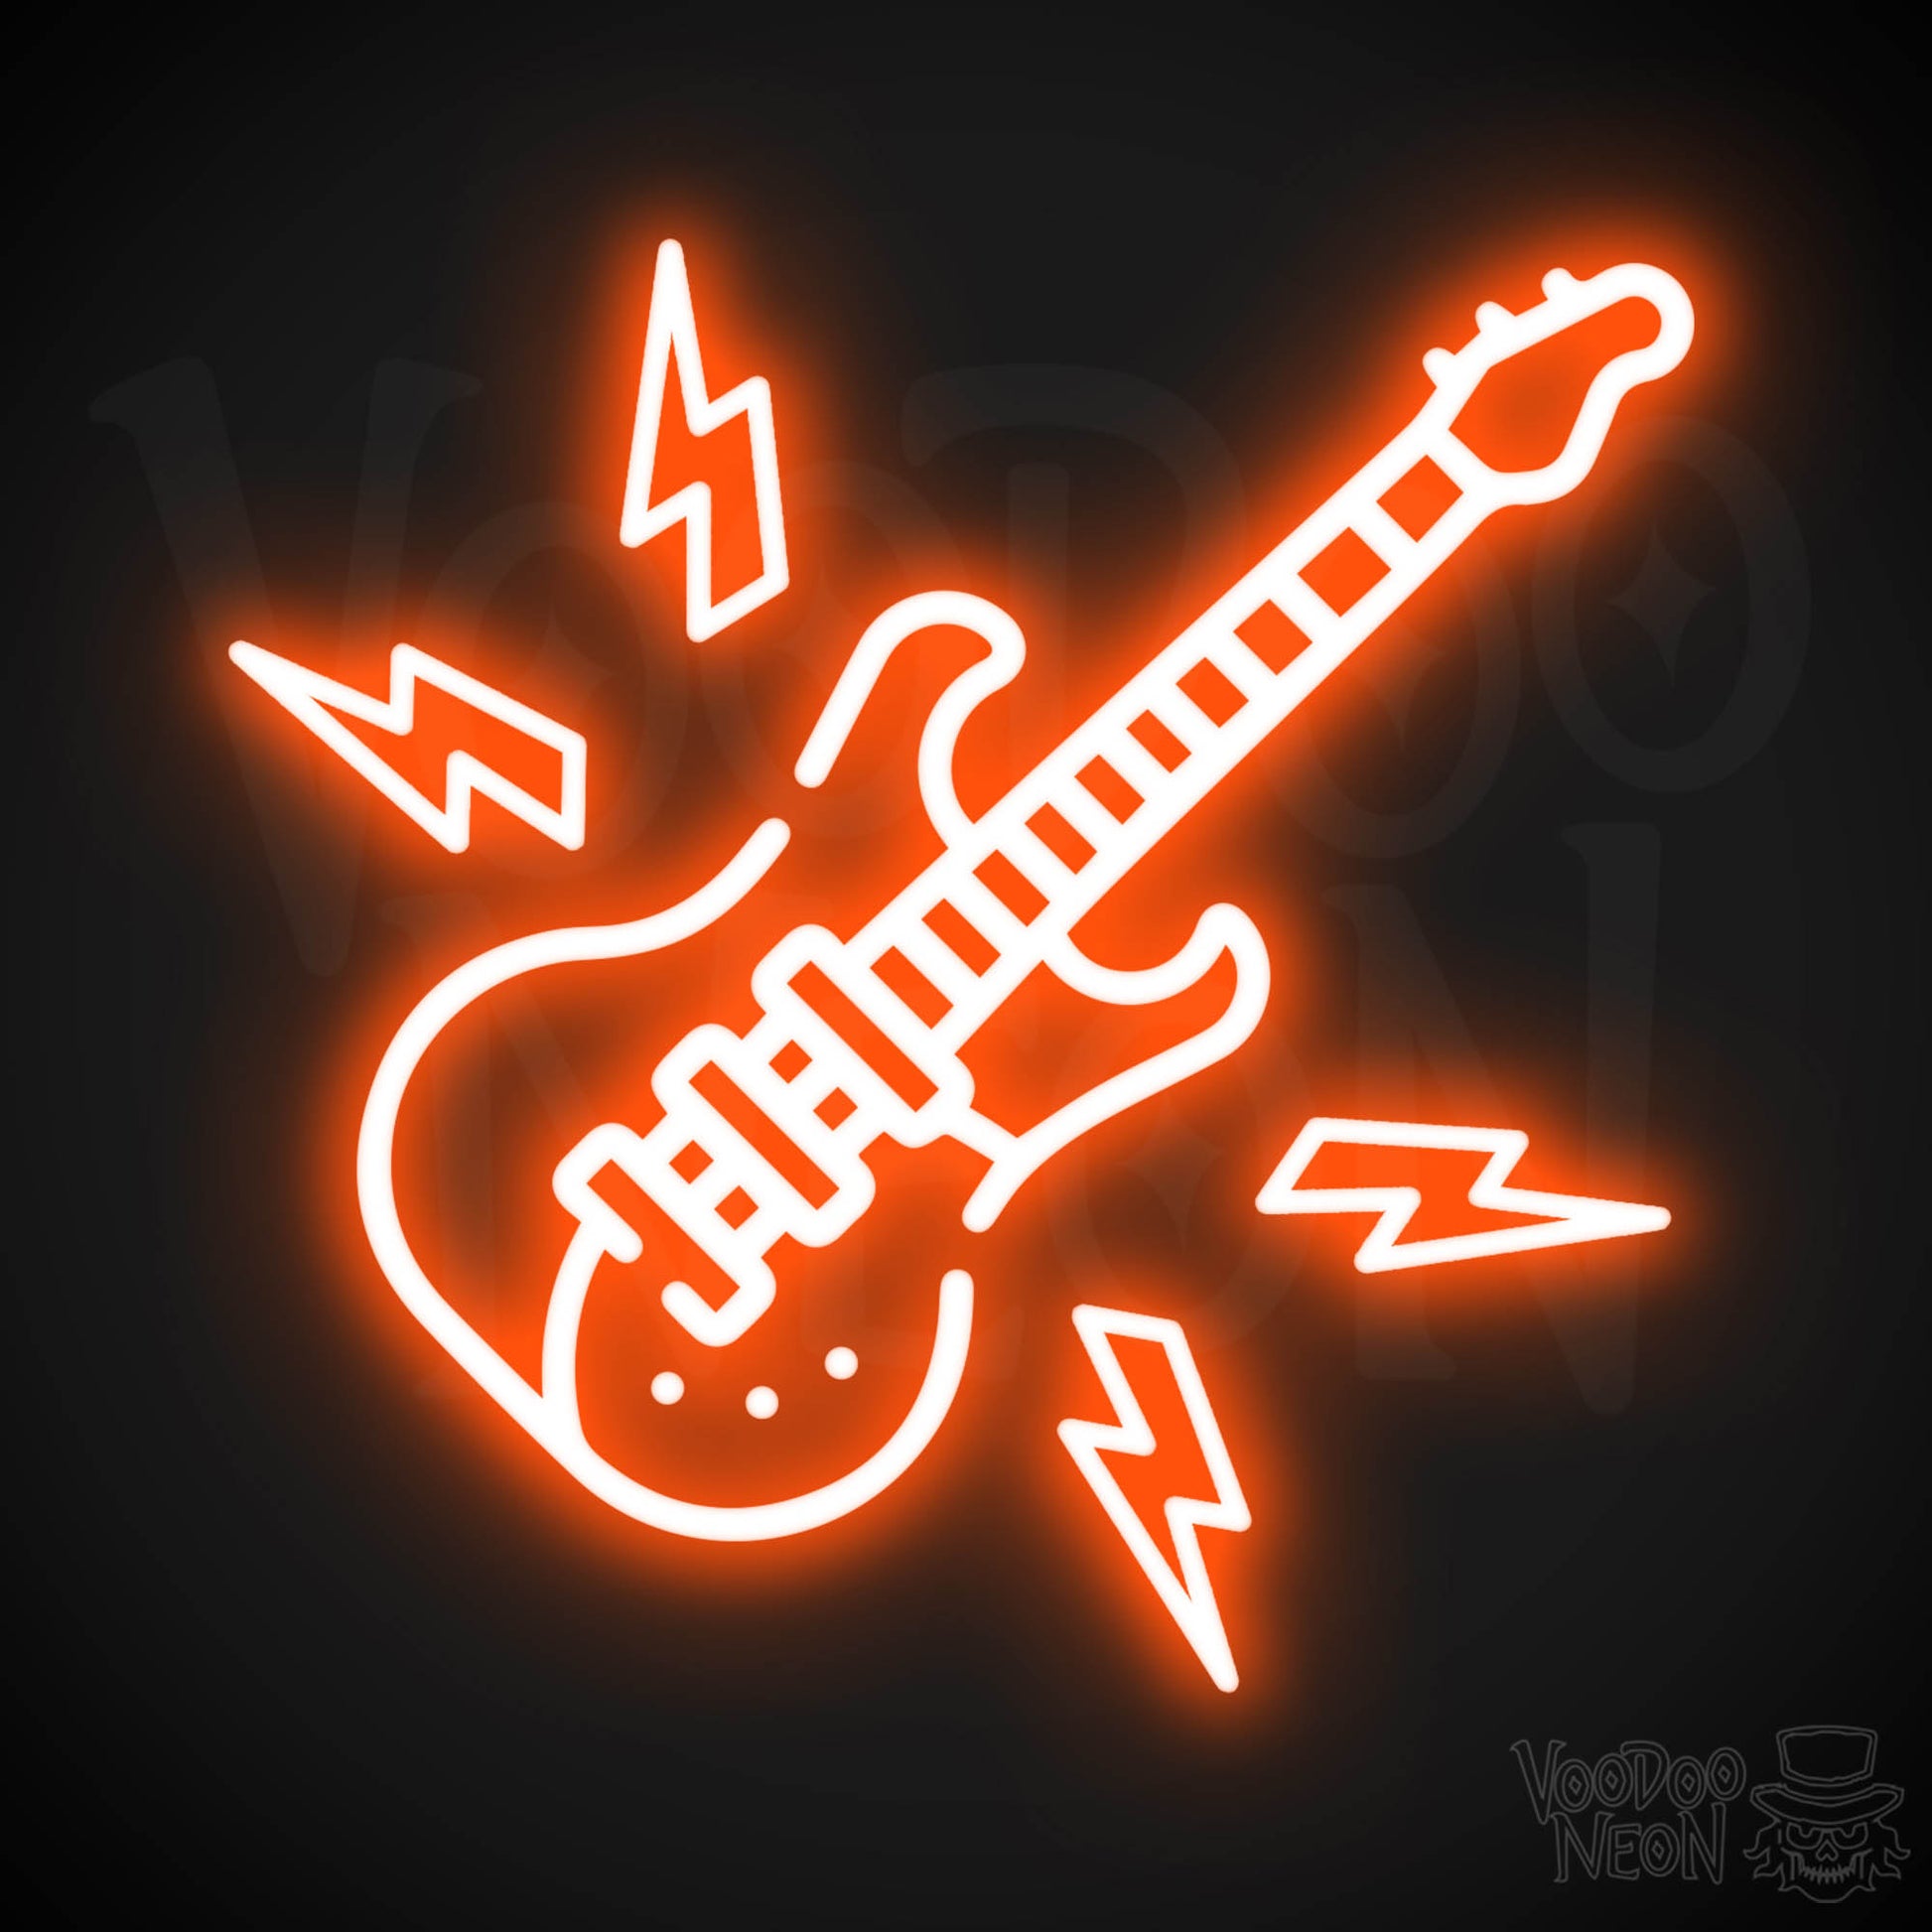 Neon Electric Guitar Sign - Electric Guitar Neon Sign - Electric Guitar Neon Wall Art - Color Orange